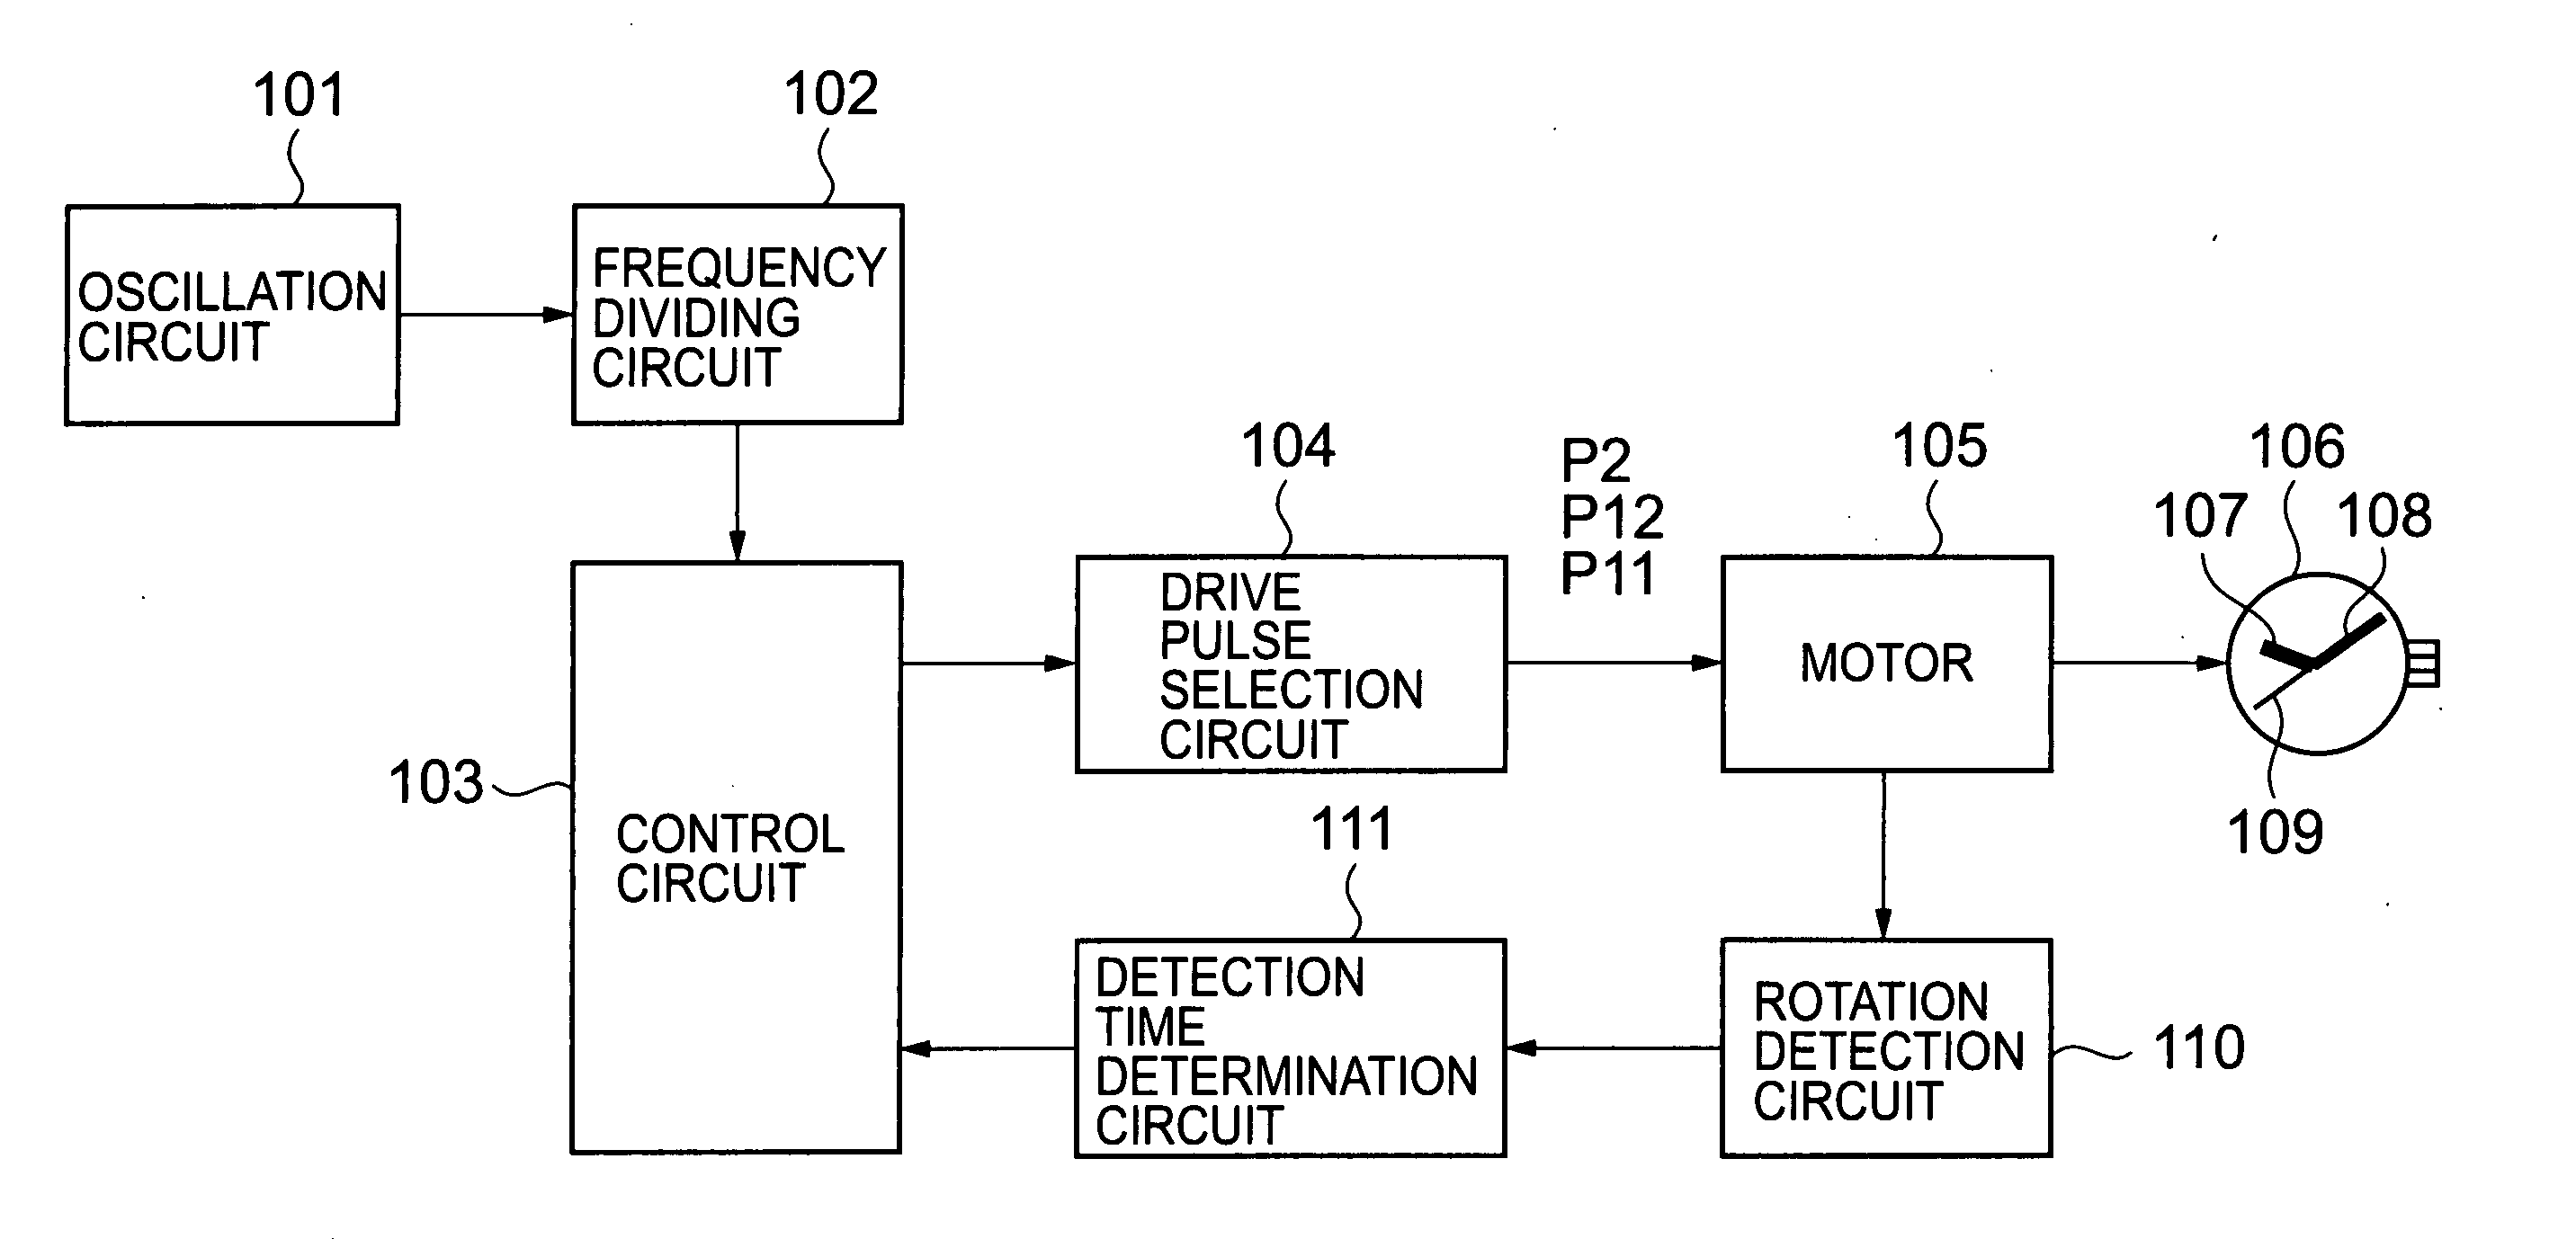 Analogue Electronic Clock and Motor Control Circuit